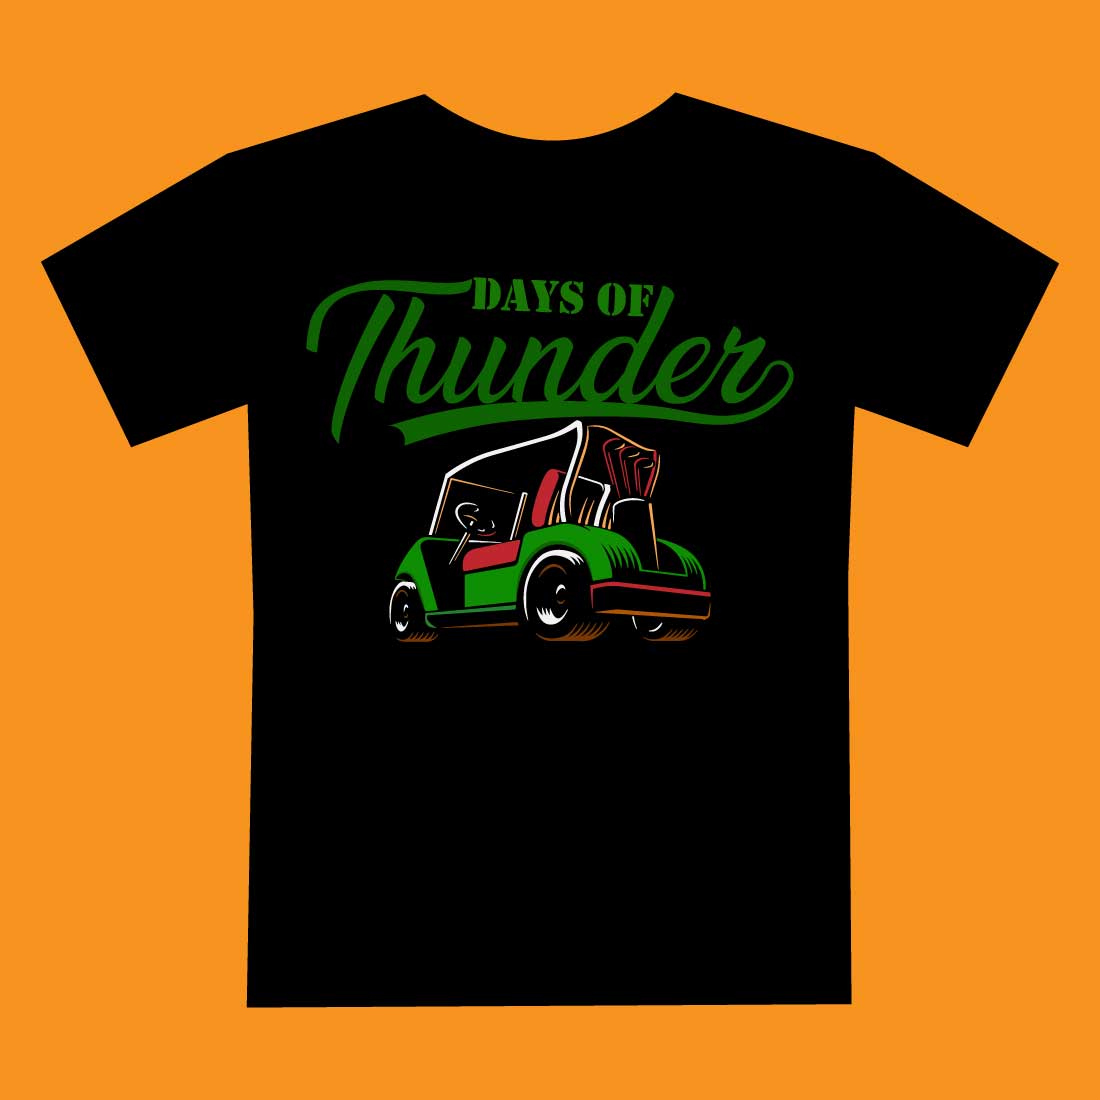 Days of Thunder T shirt design cover image.